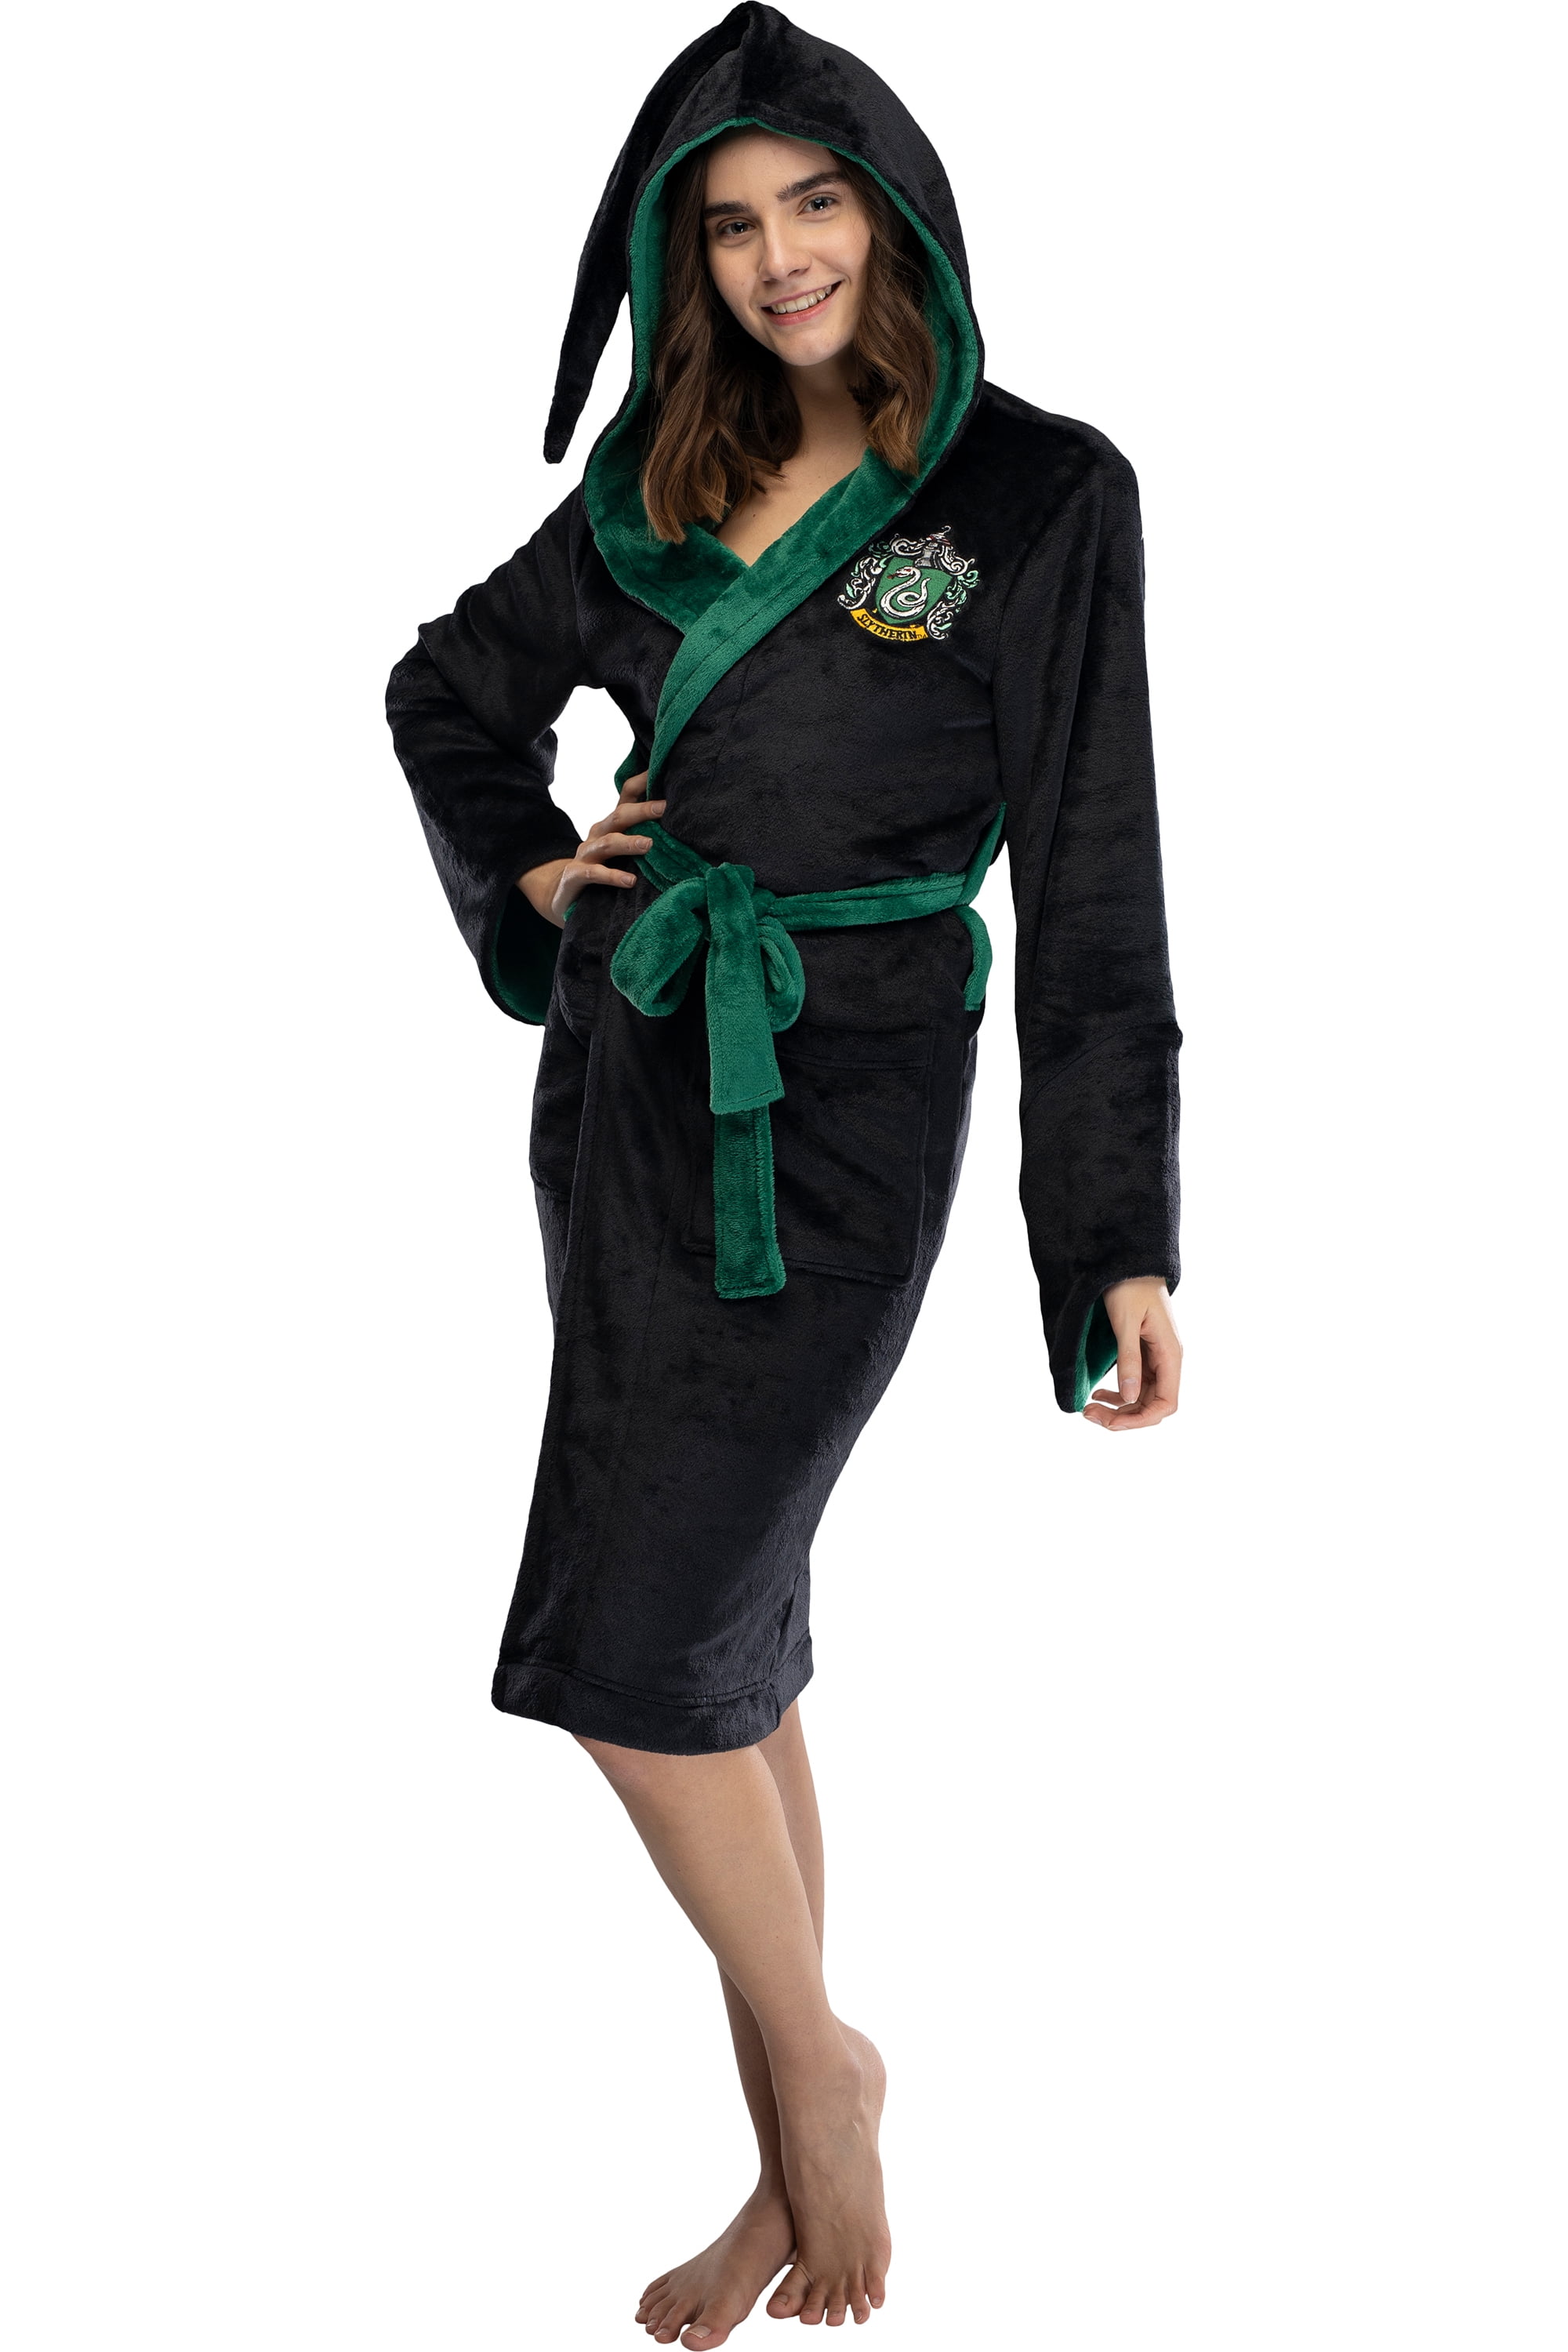 Harry Potter Robe Adult Costume - Standard 883028978908 